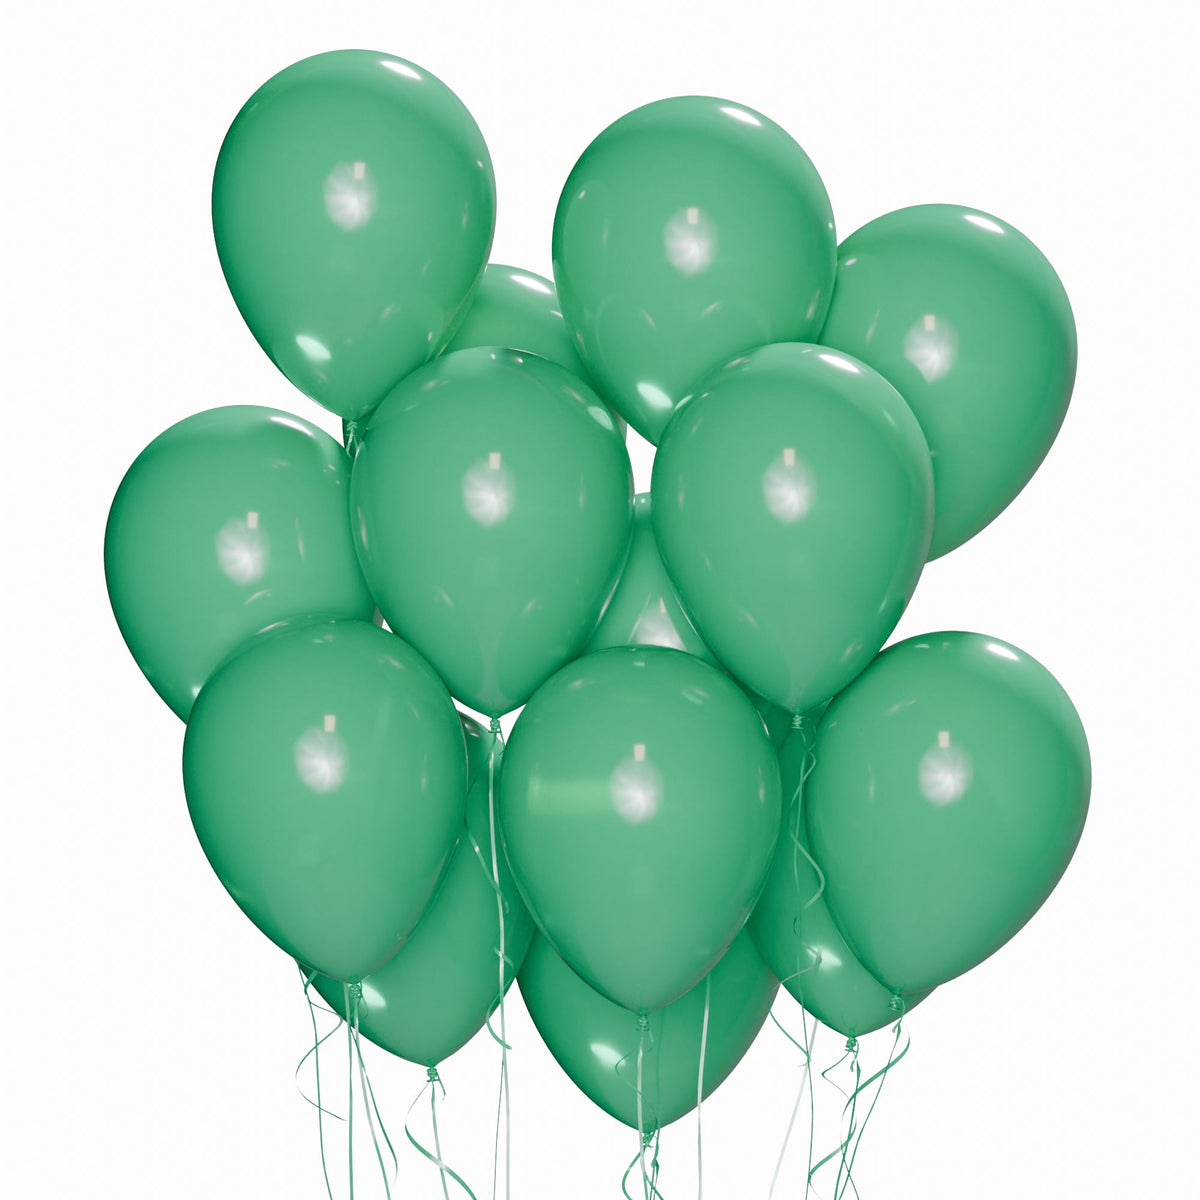 WIDE OCEAN INTERNATIONAL TRADE BEIJING CO., LTD Balloons Mid Green Latex Balloon, 12 Inches, 72 Count 810077656365